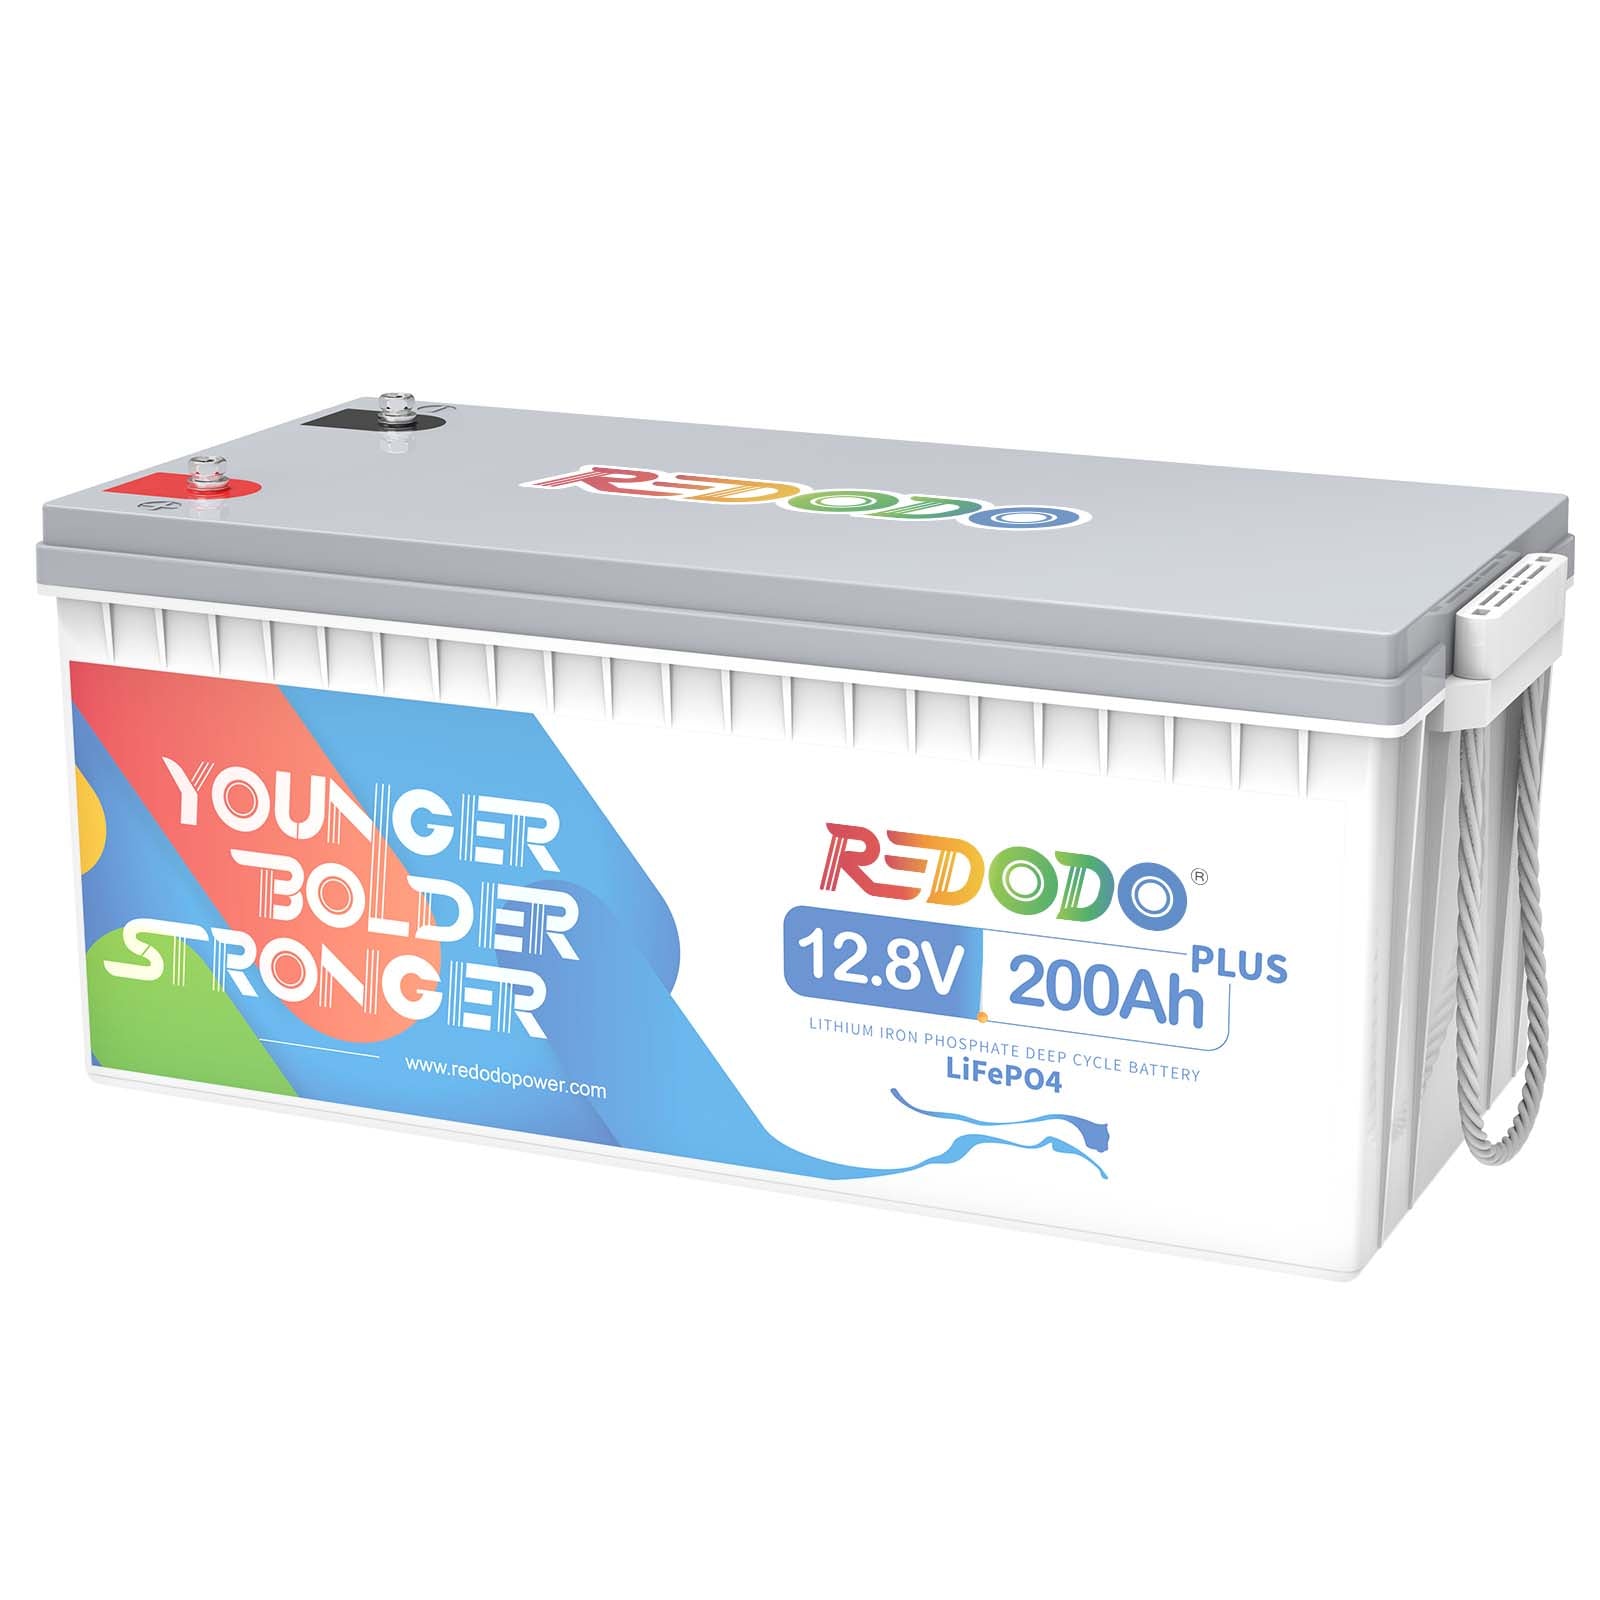 Redodo's 12V battery series